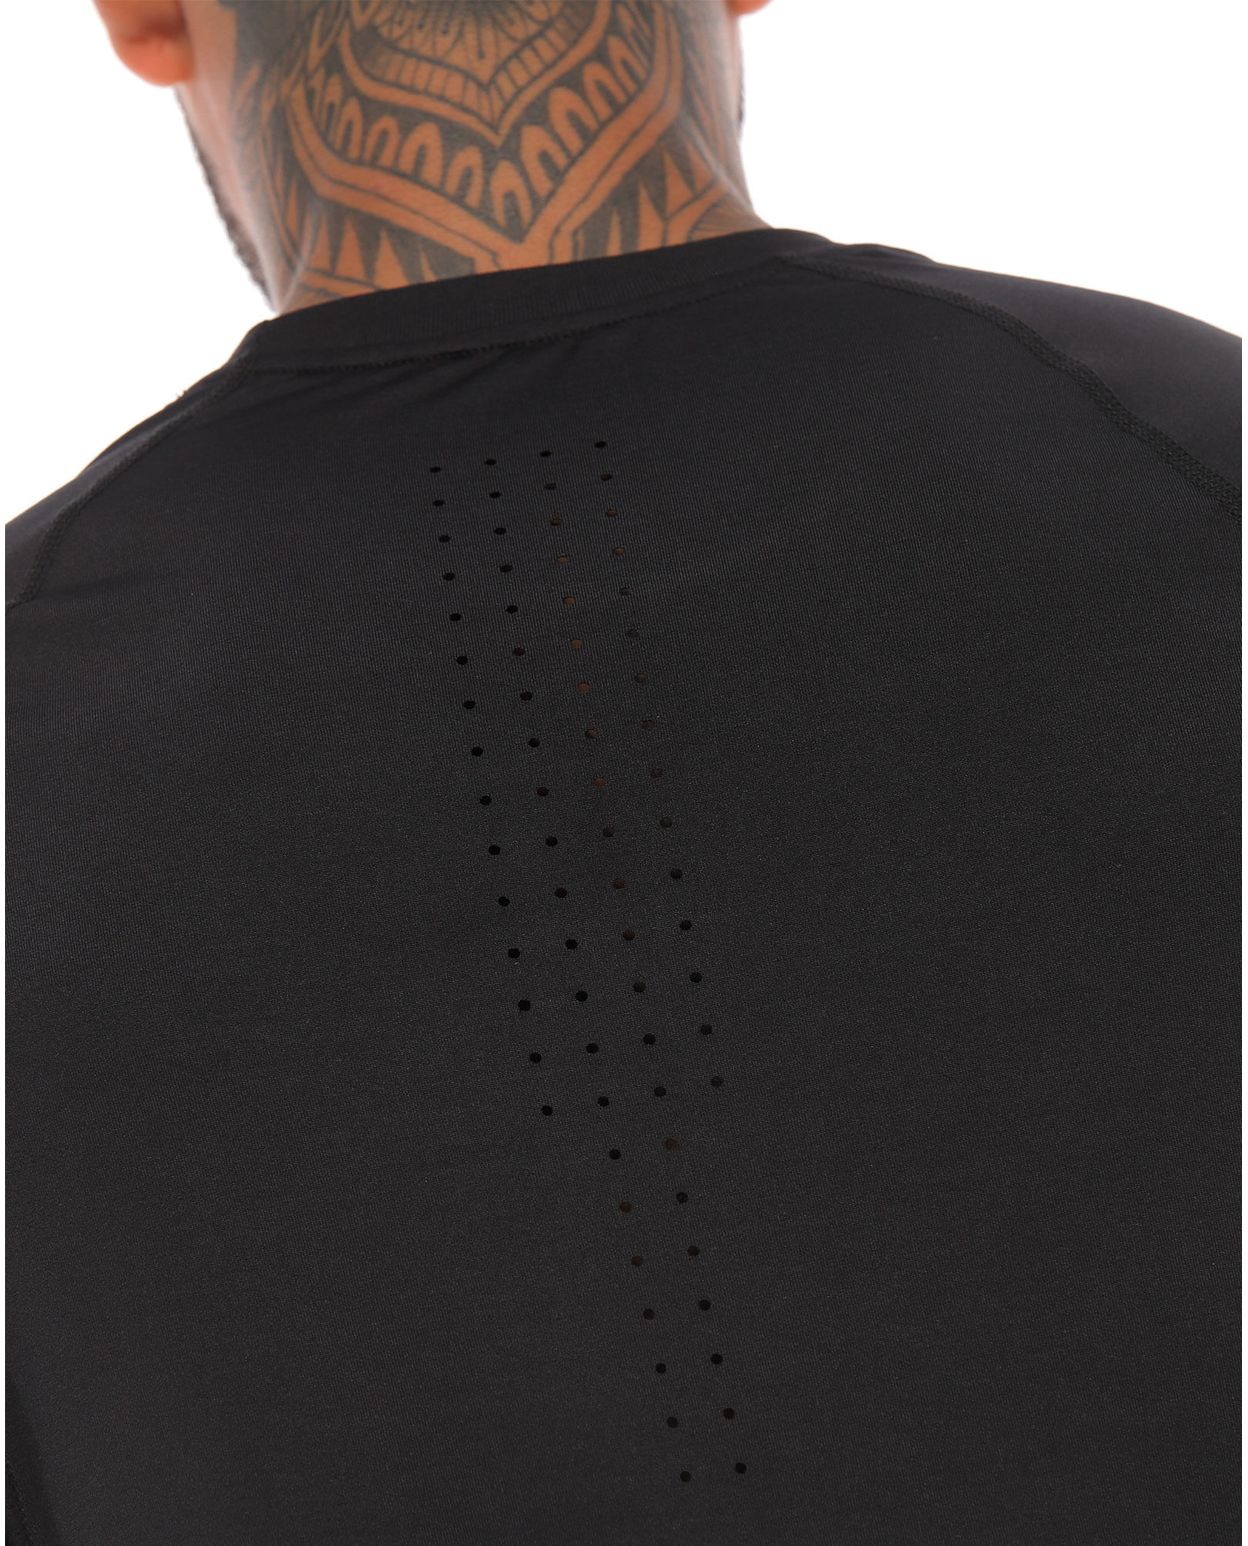 camiseta deportiva manga corta color negro para hombre parte trasera cortes transpirables